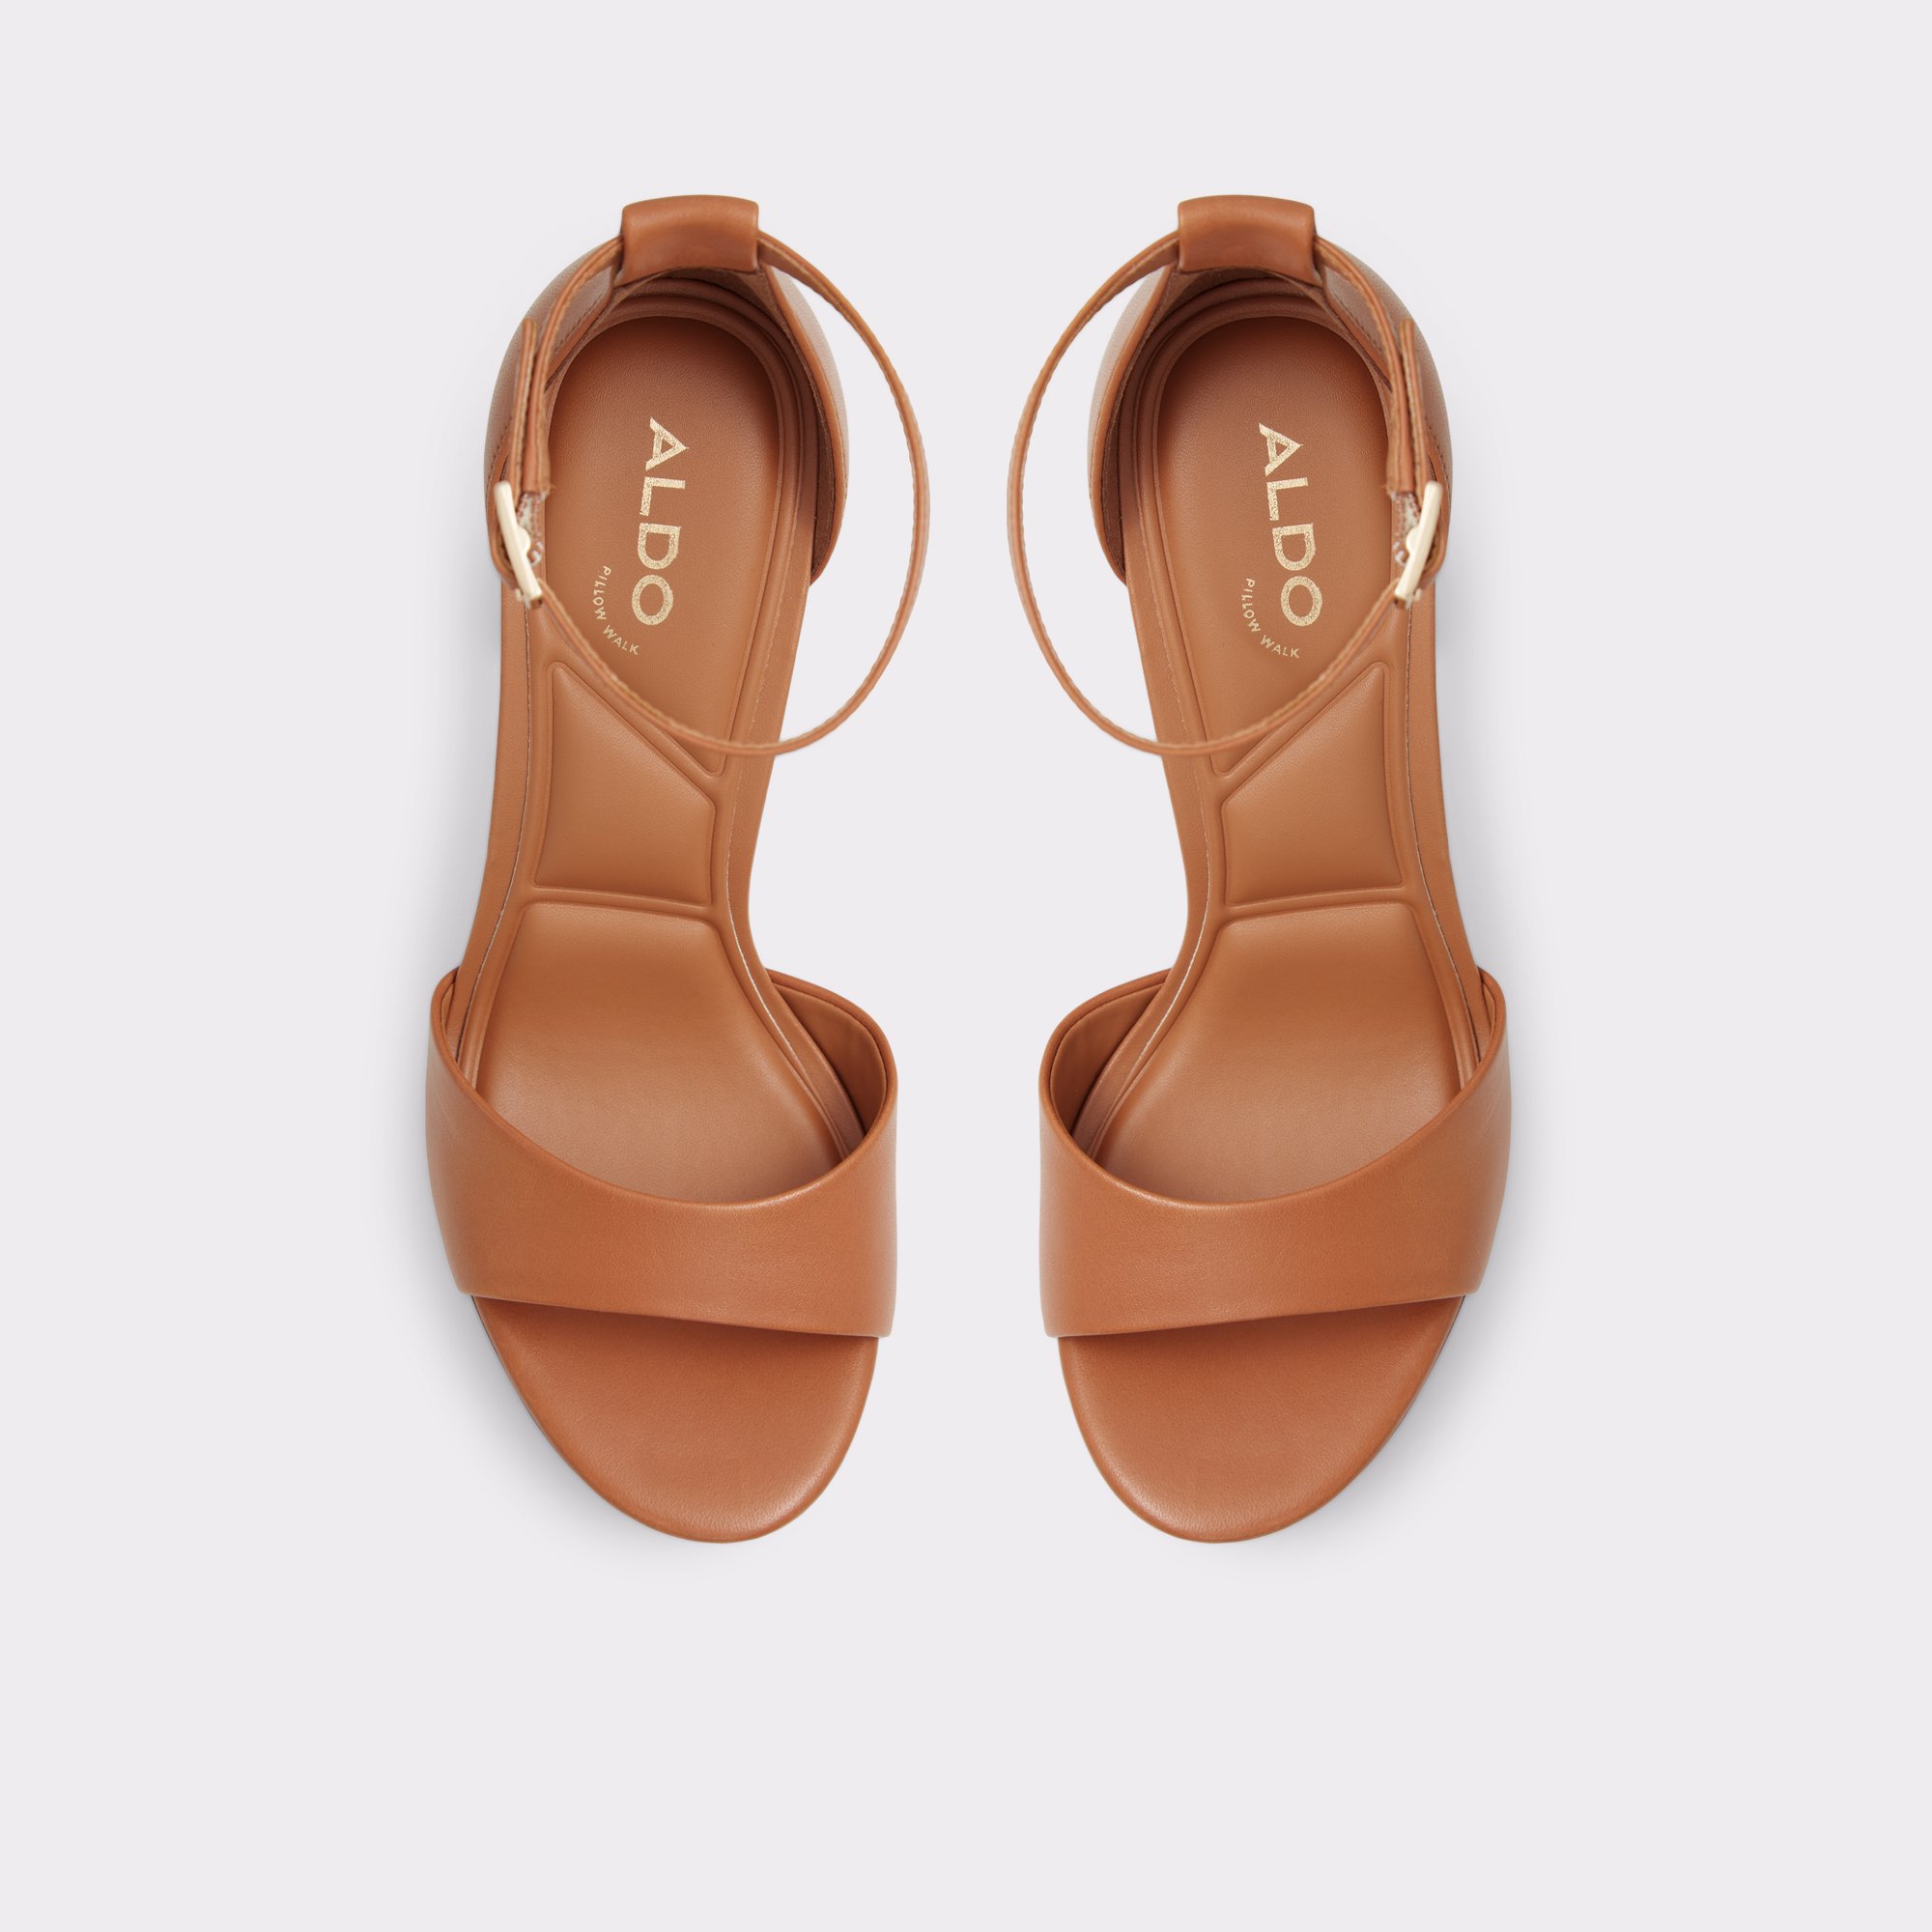 Enaegyn2.0 Light Brown Women's Heeled sandals | ALDO Canada